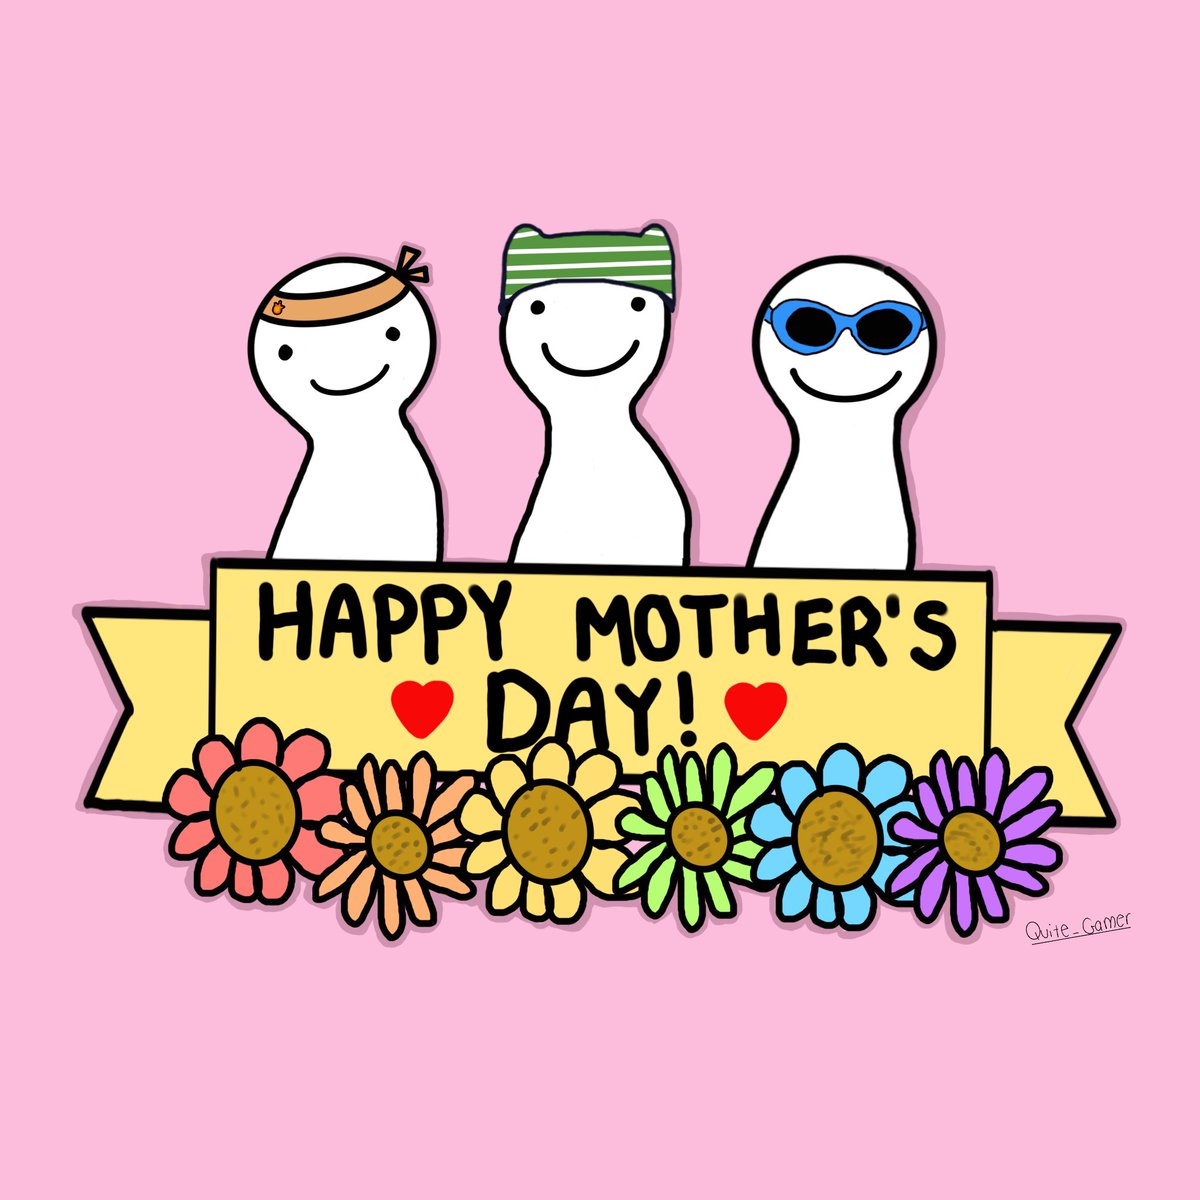 Happy Mother’s Day! 

#dreamfanart #sapnapfanart #gnffanart #dteamfanart @DreamFanartAcc